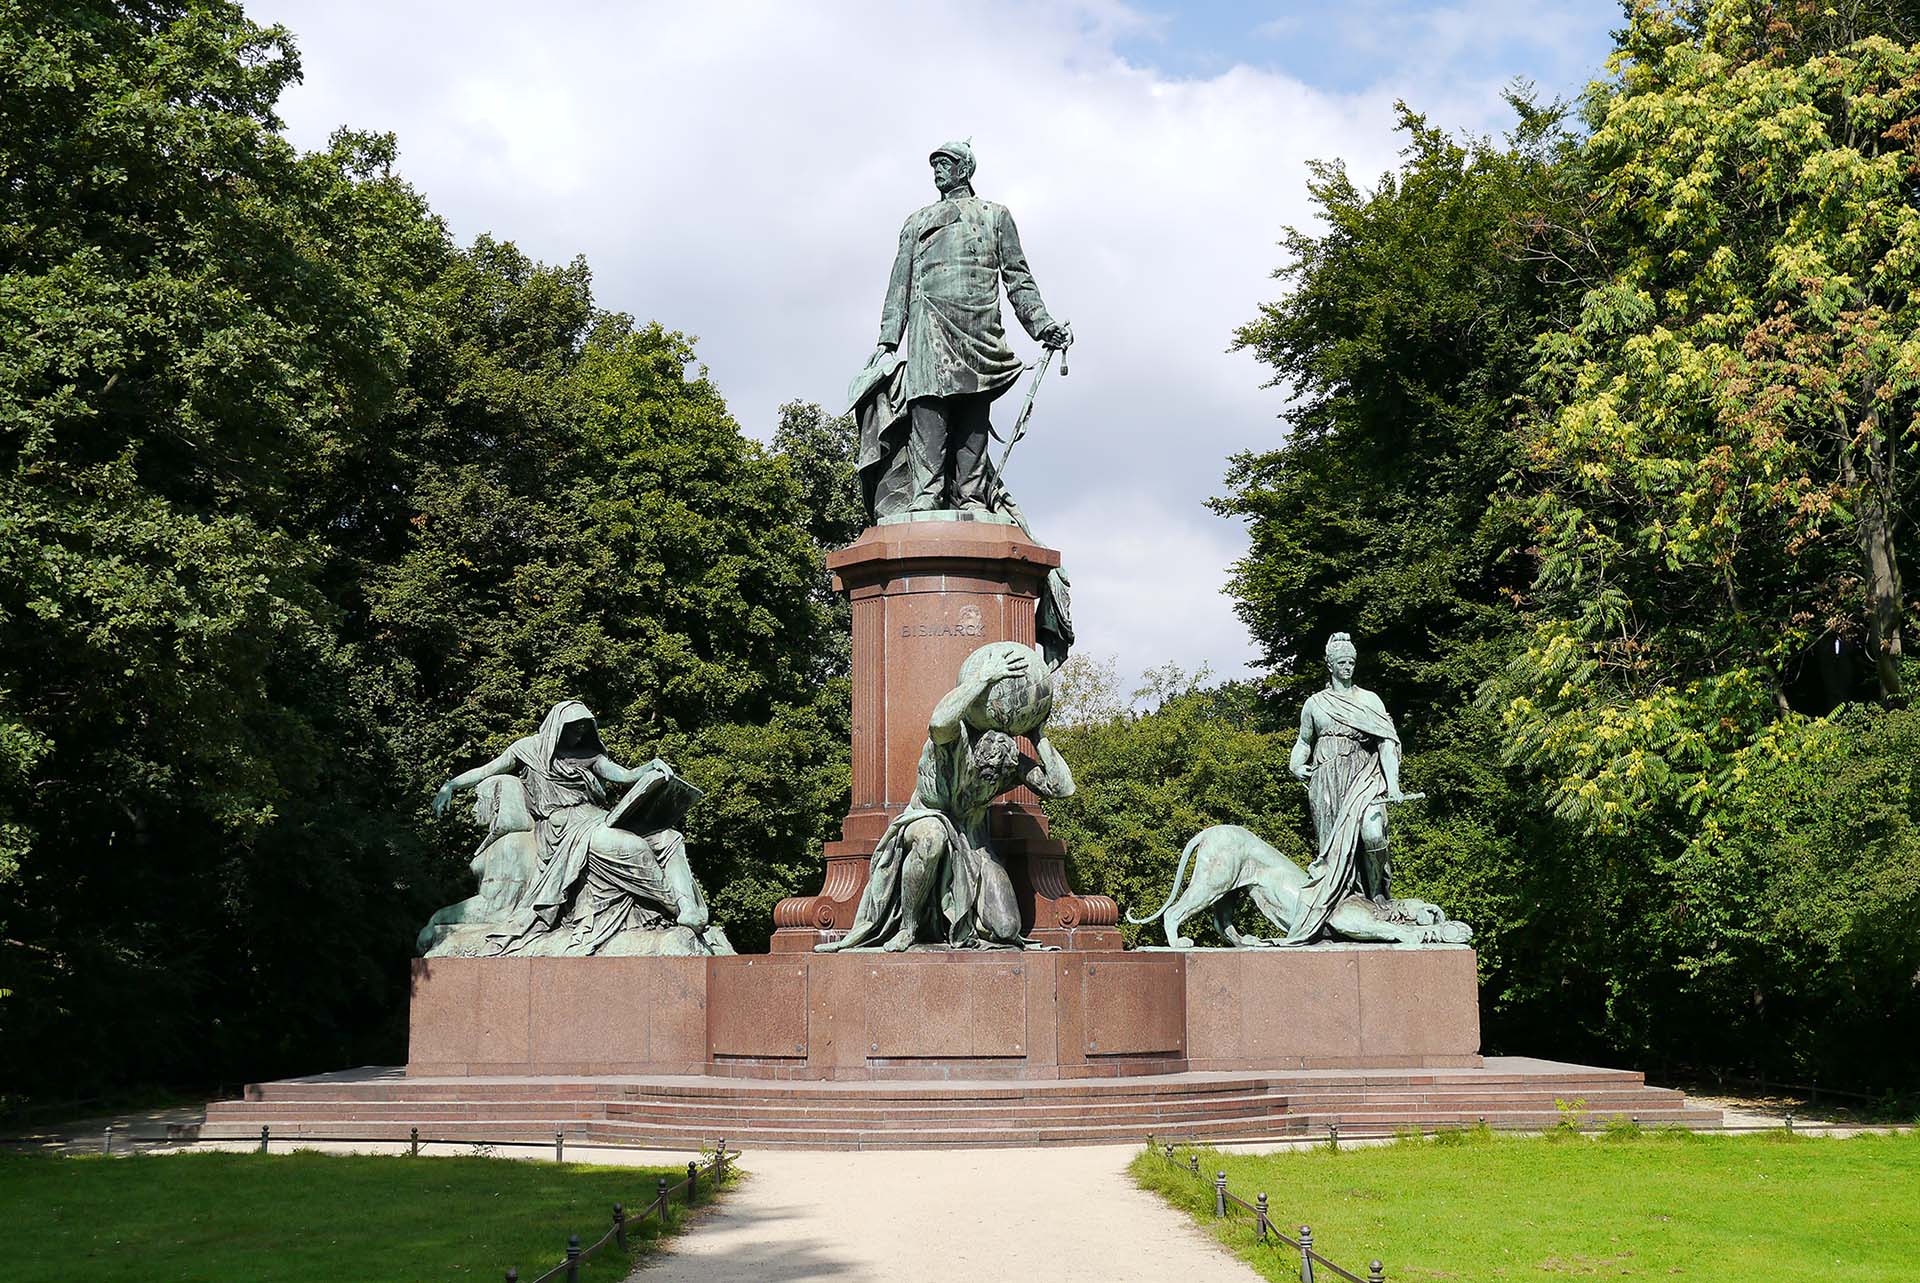 Bismarck Denkmal am Großen Stern in Berlin Tiergarten (Bild: jensdarup, CC BY-SA 3.0, 2012)